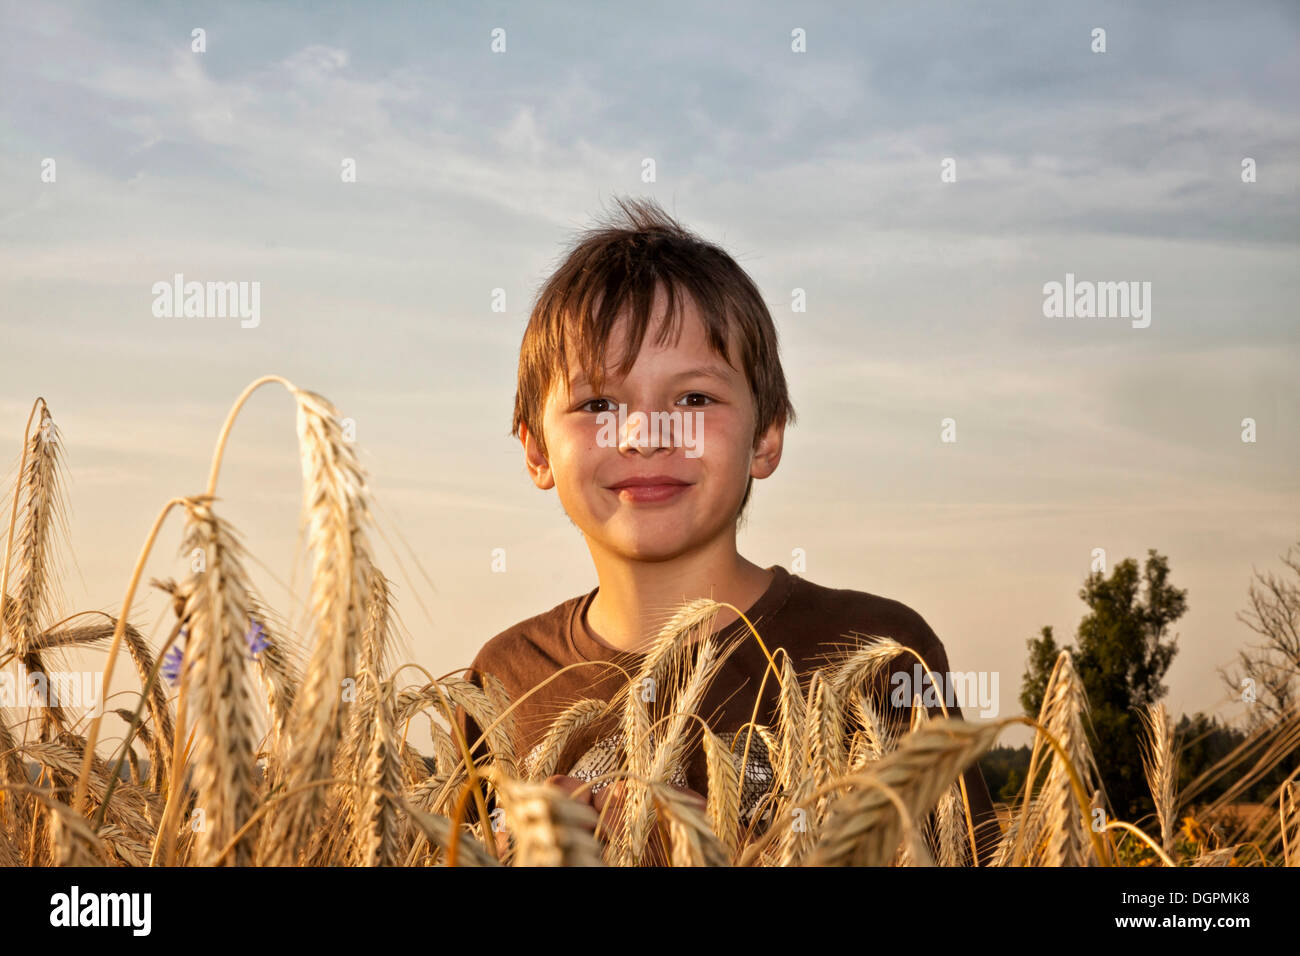 Boy standing in a barley field Stock Photo